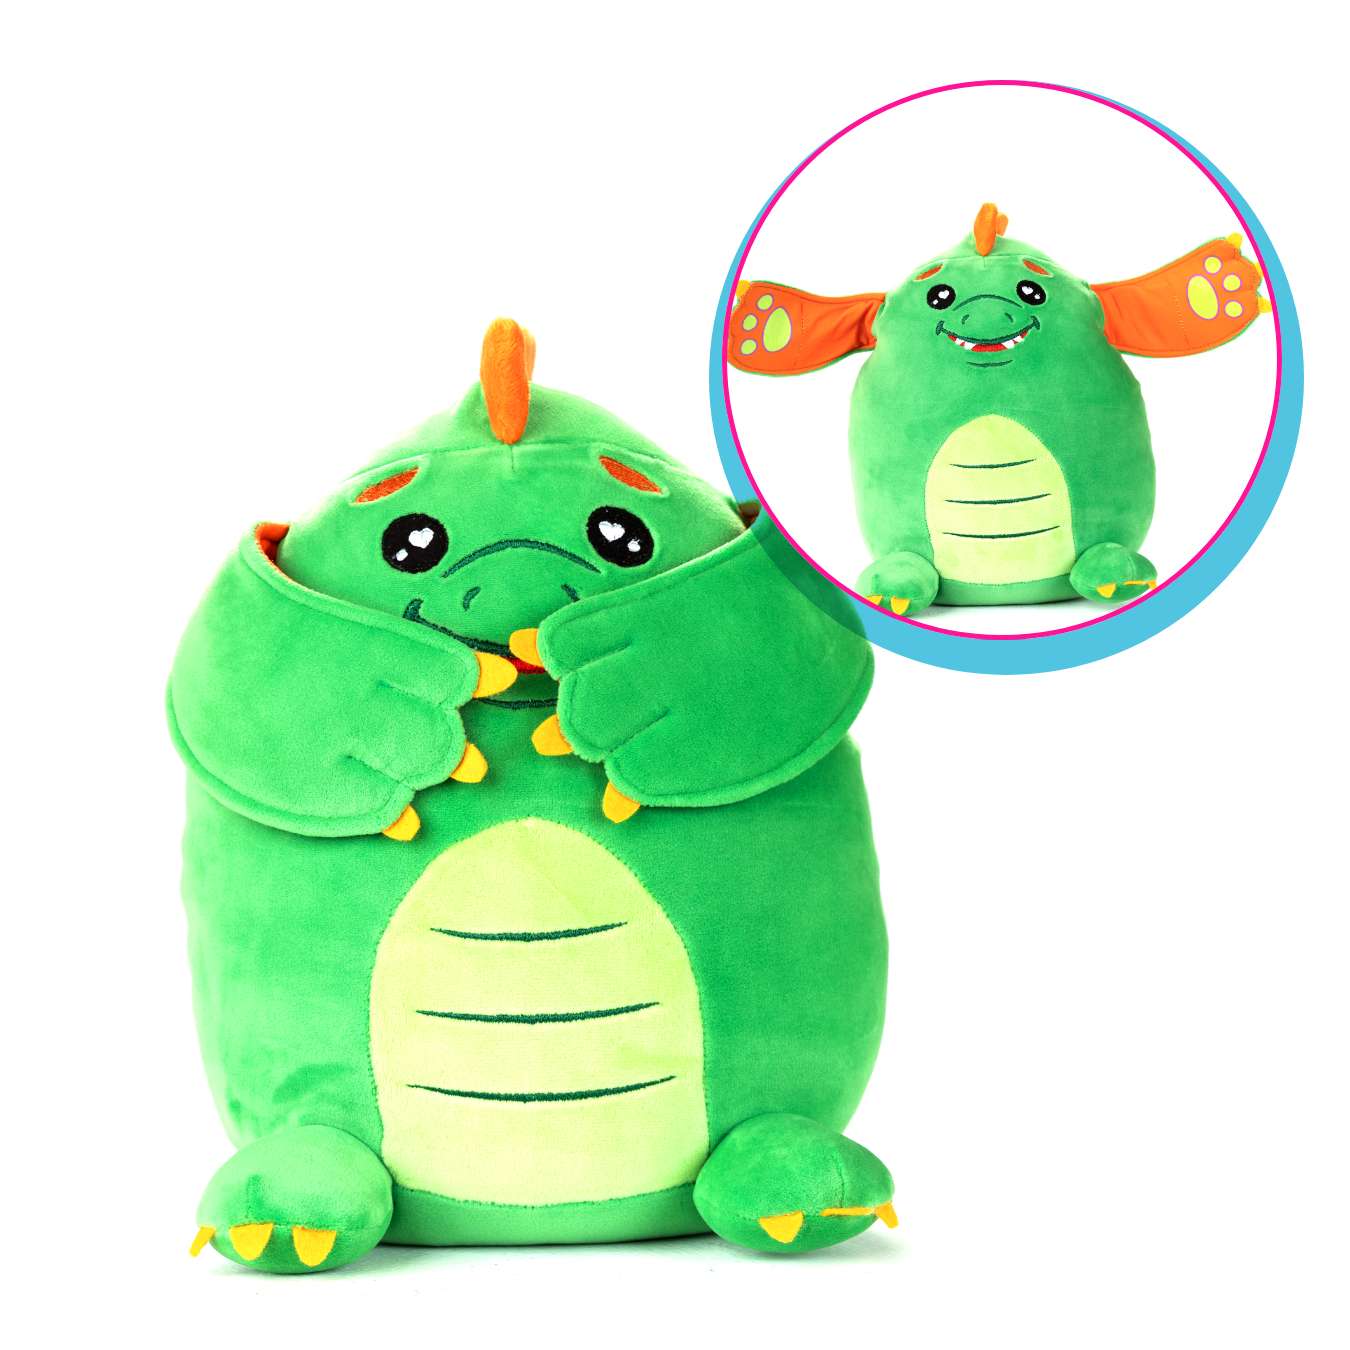 View Huggimalz Dinosaur Soft Plush Toy Interactive Squishy Toy That Hugs You Back High Street TV information